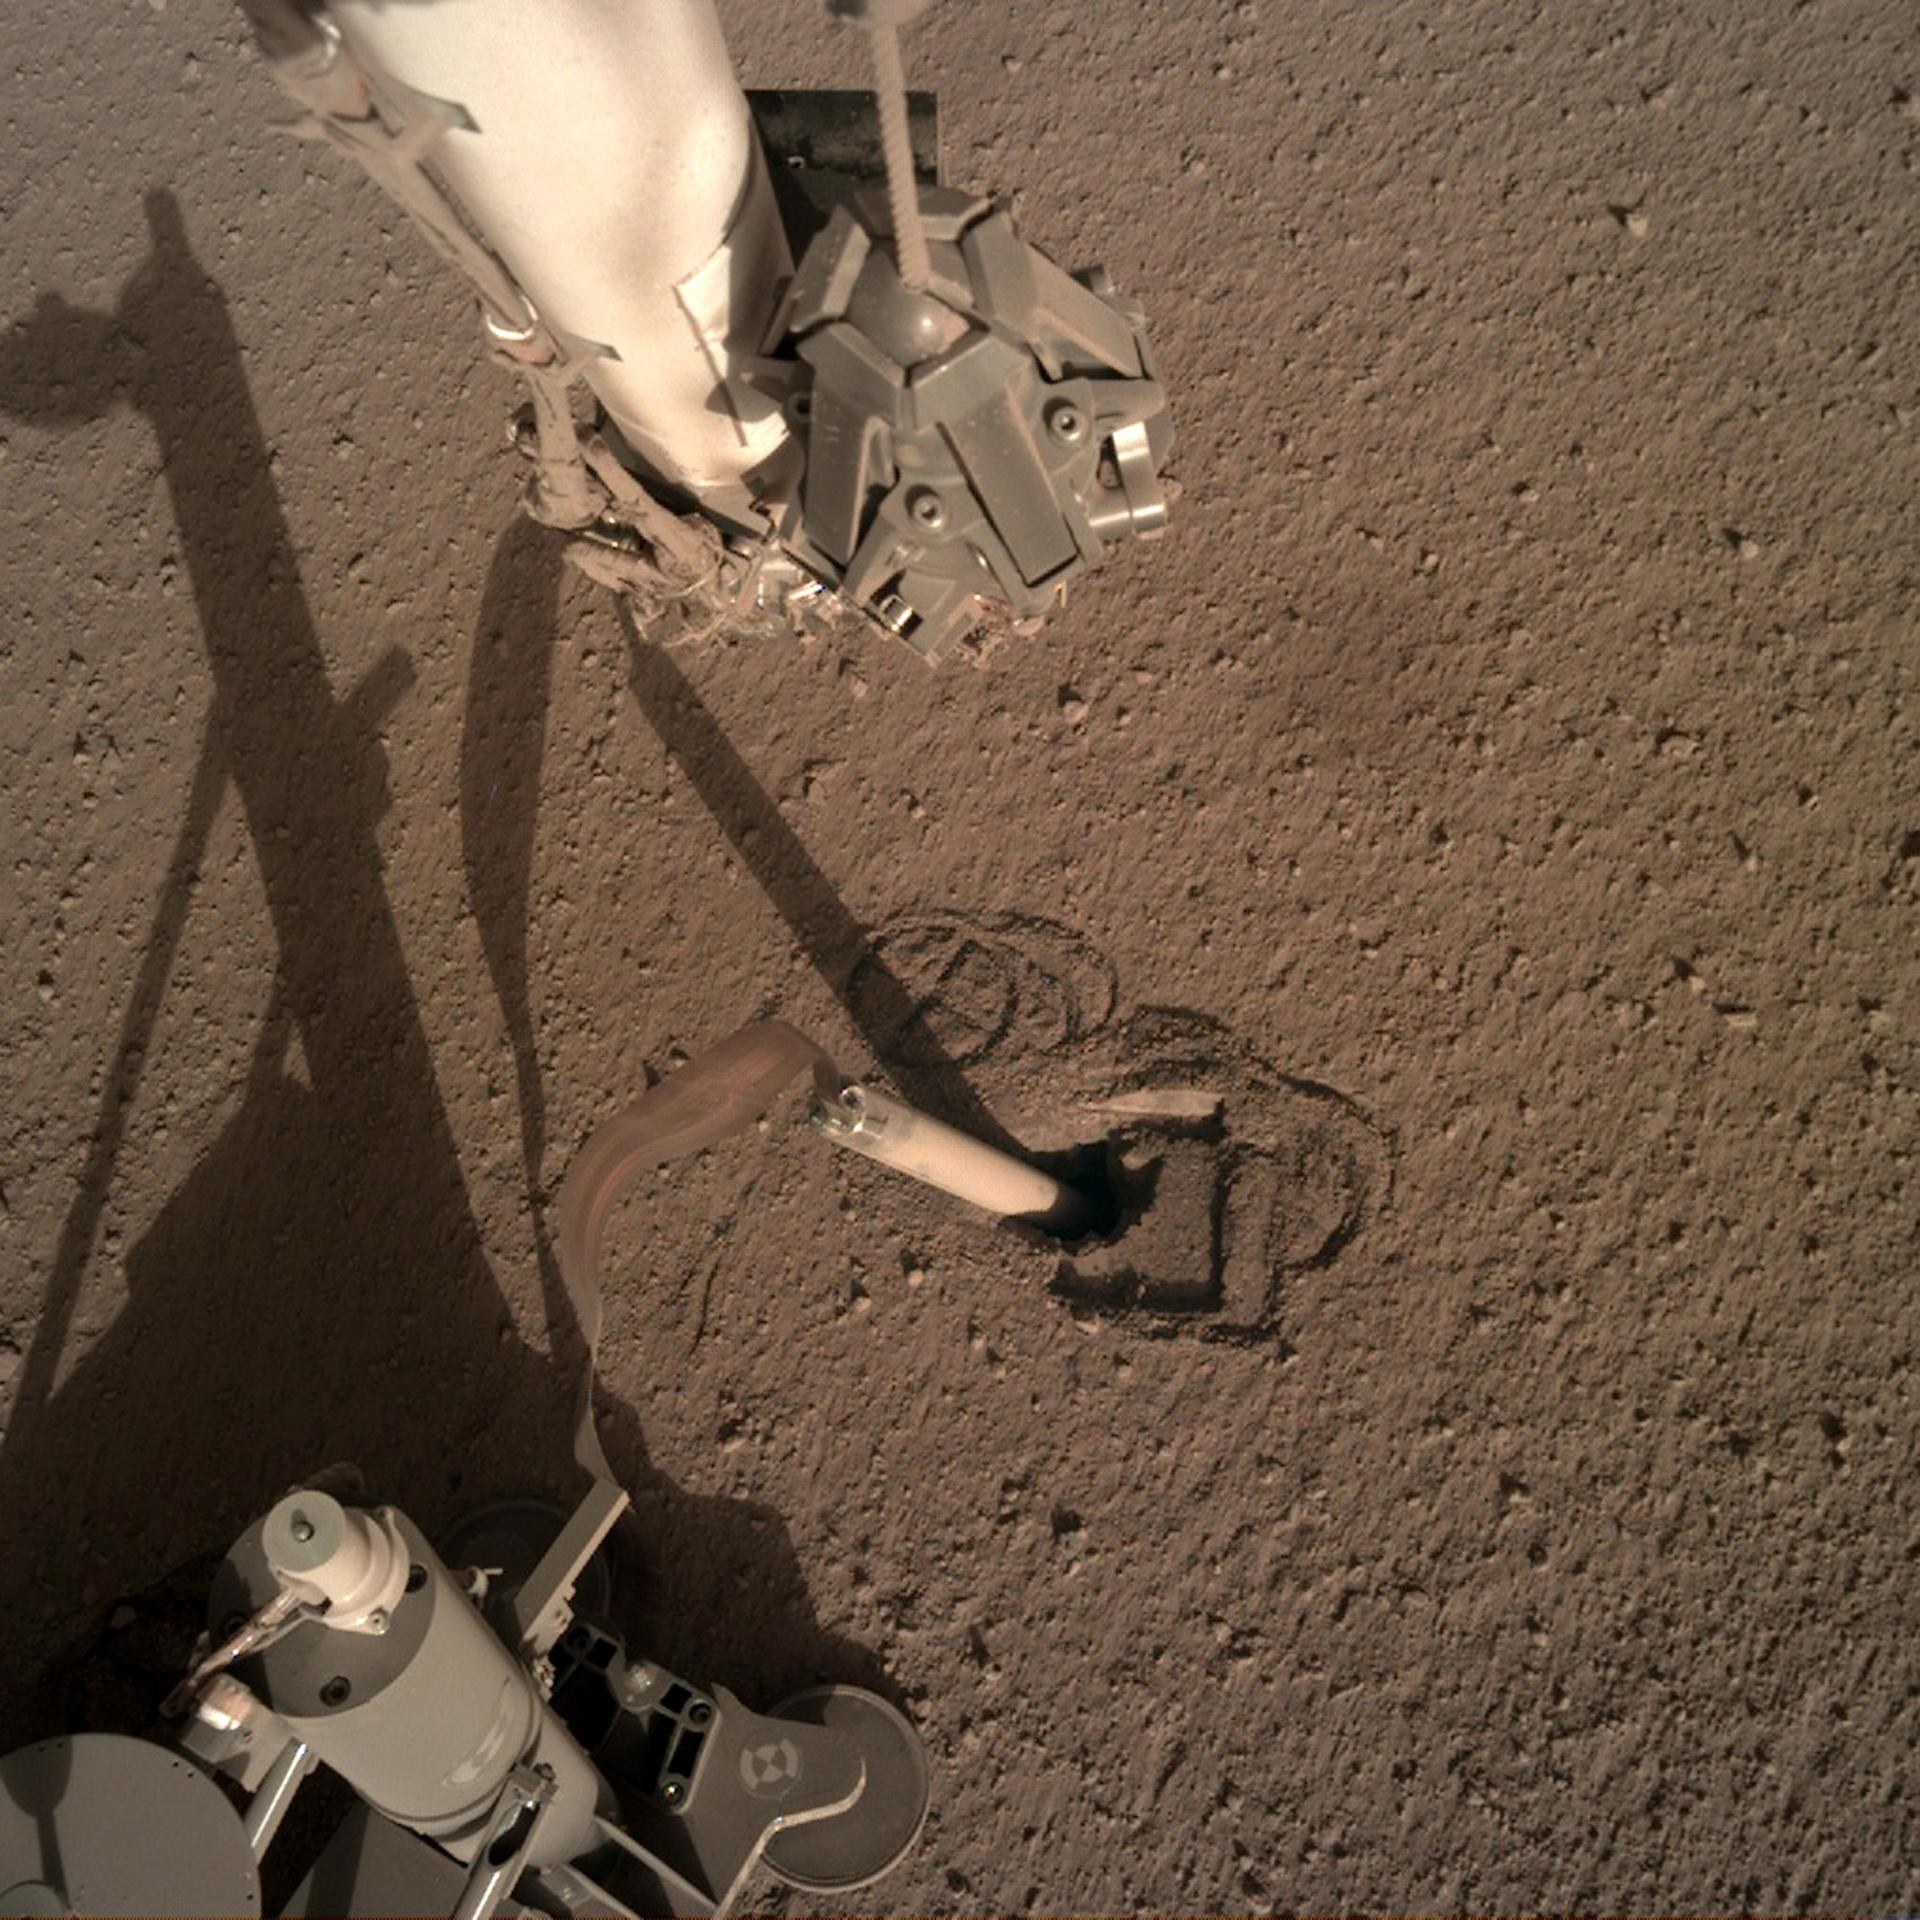 DLR Mars 'Mole' after having moved backwards